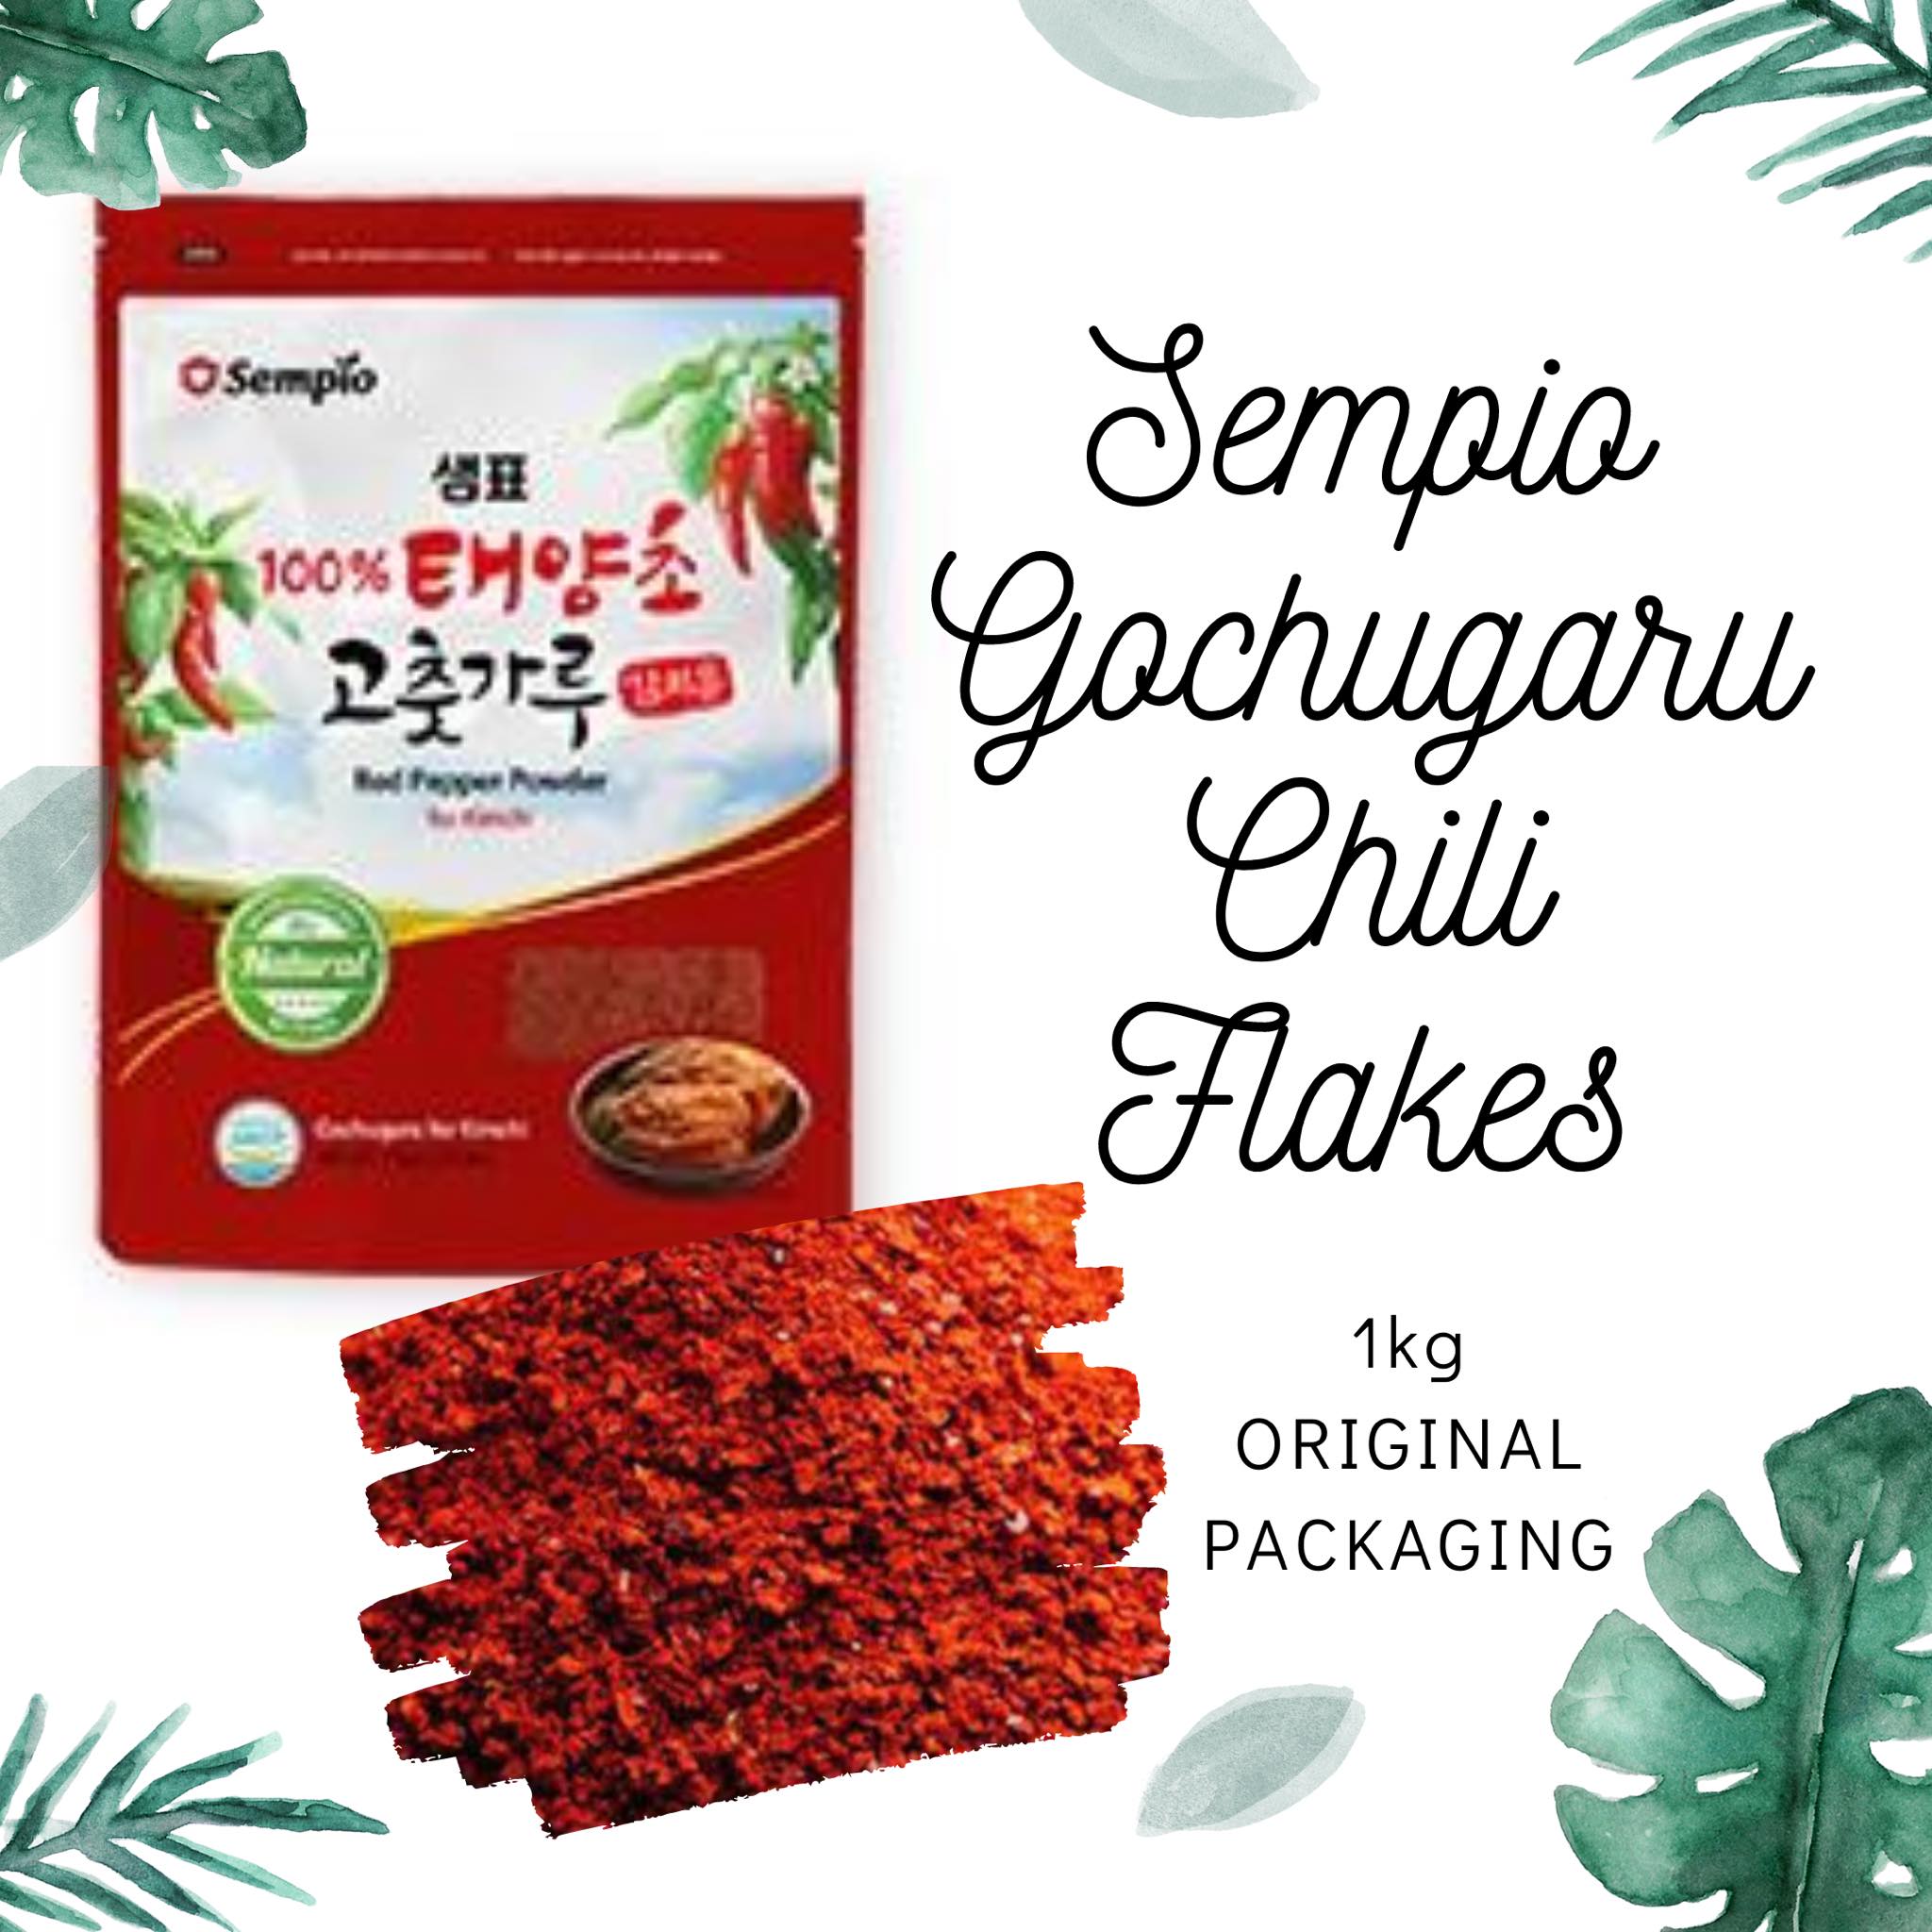 Sempio Gochugaru Chili Flakes 1KG Original Packaging (Red Pepper) - KMs  Organics review and price